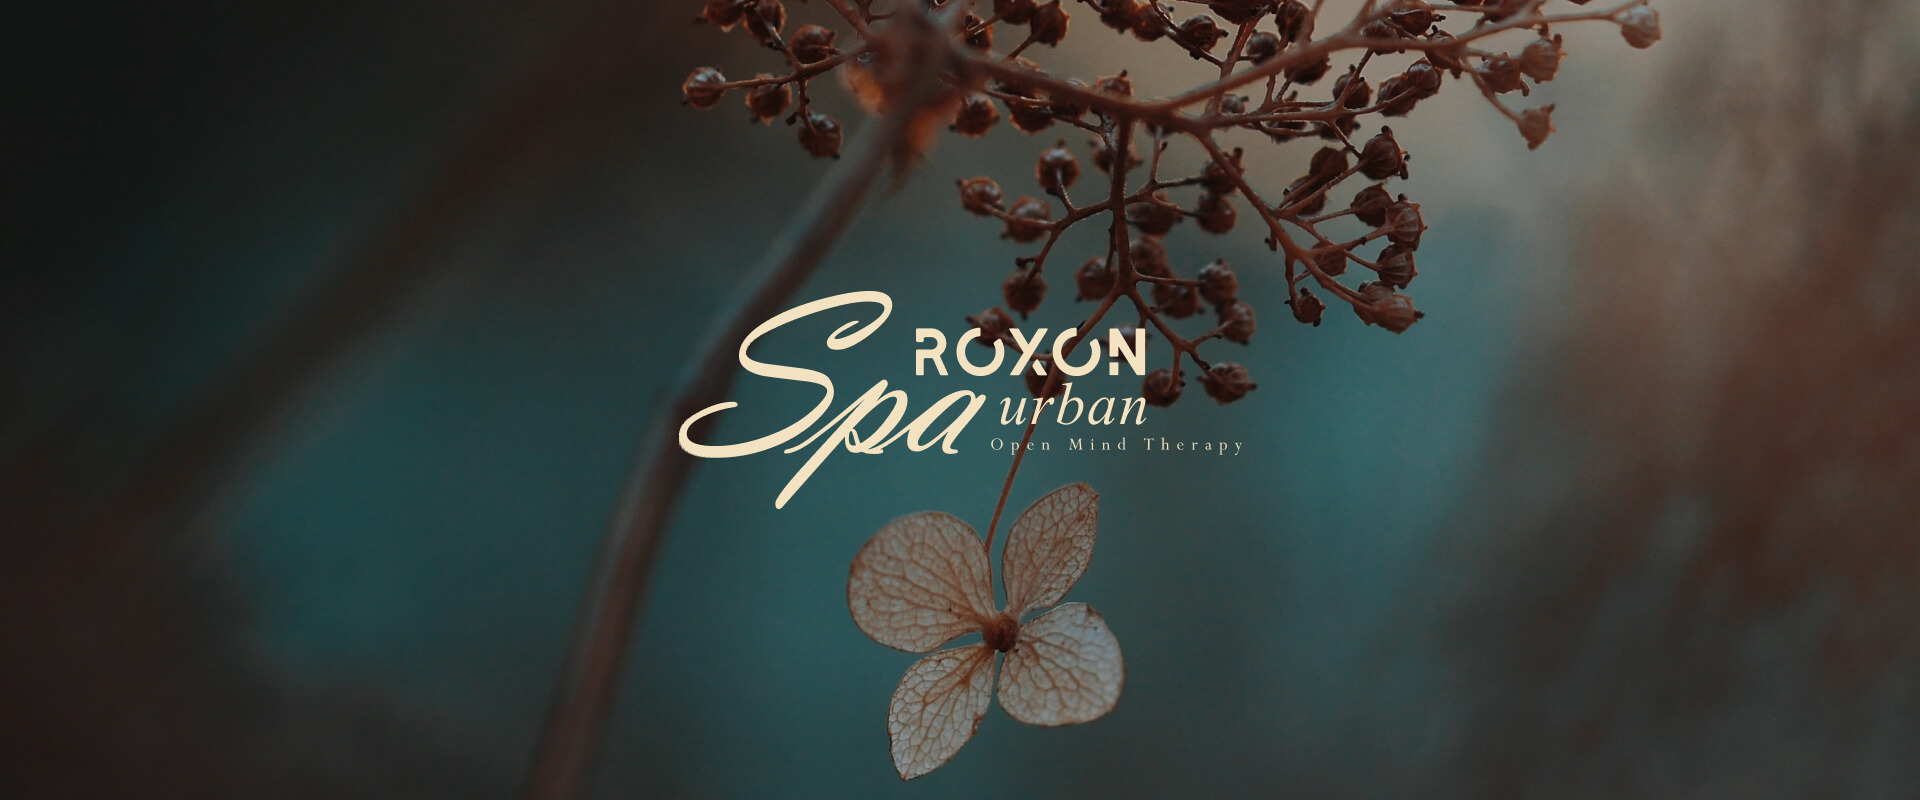 Roxon Urban Ramat Gan - Spa